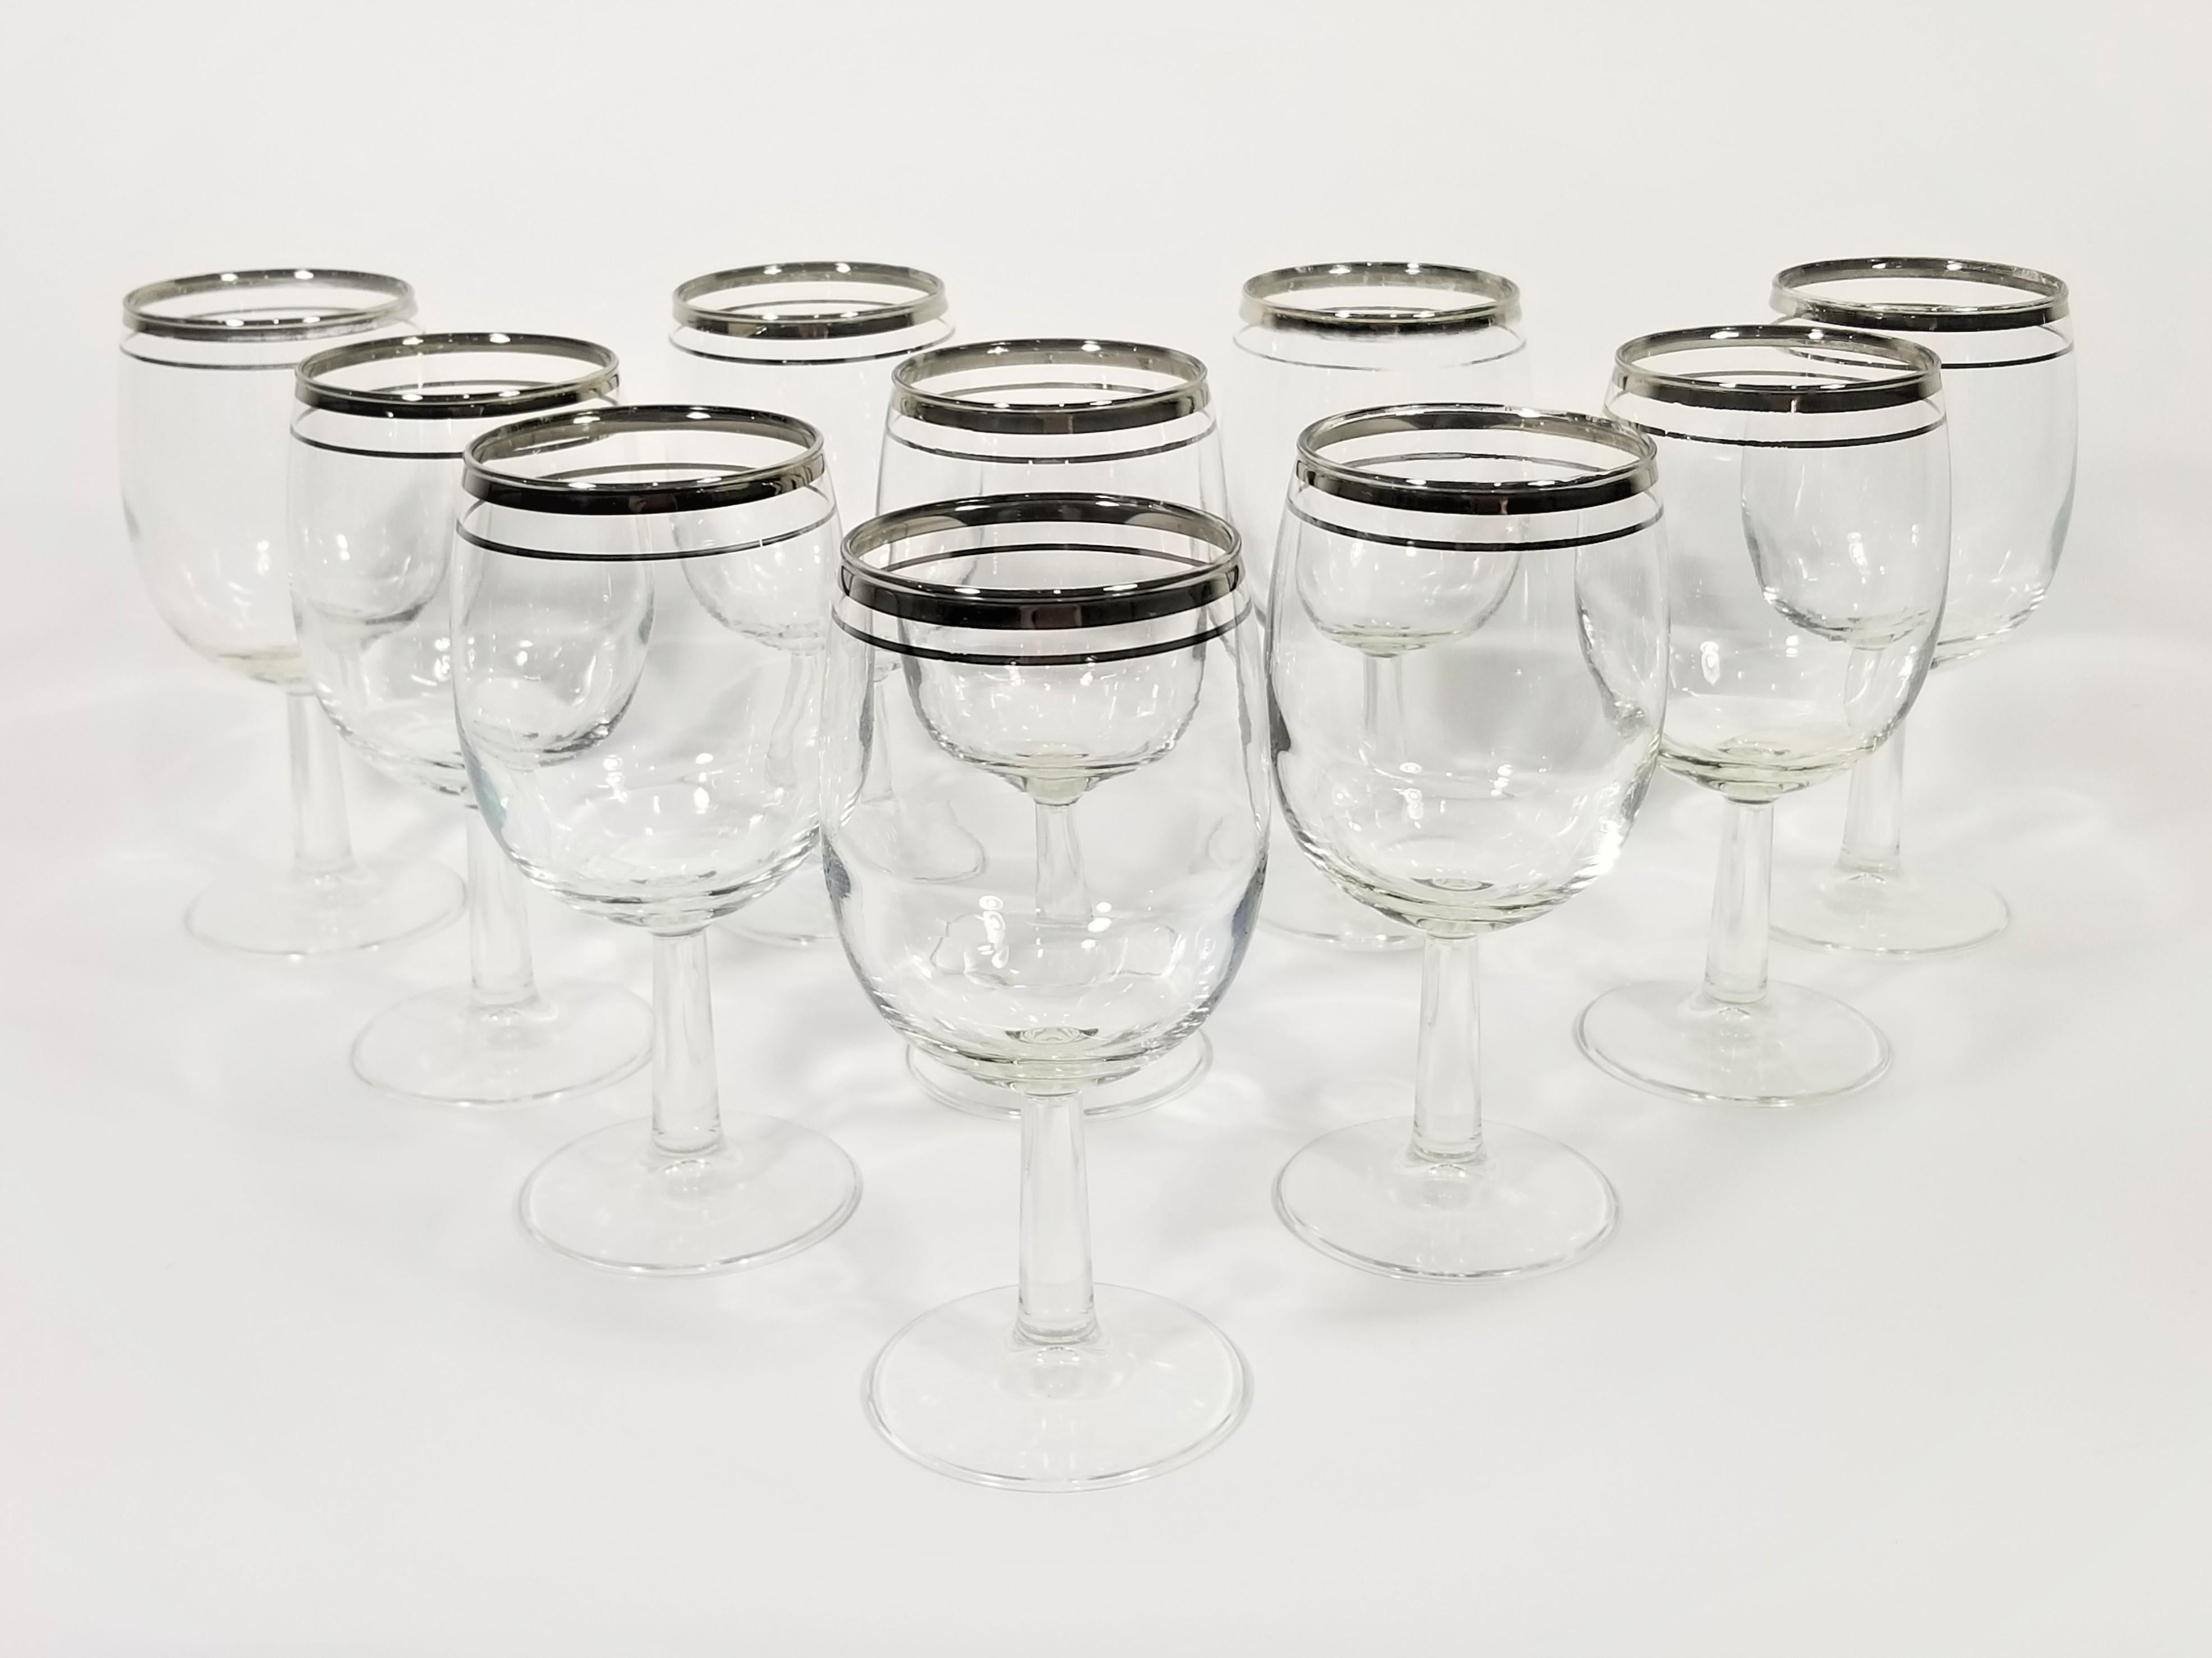 Set of 10 1960s midcentury silver rimmed stemware / wine glasses.